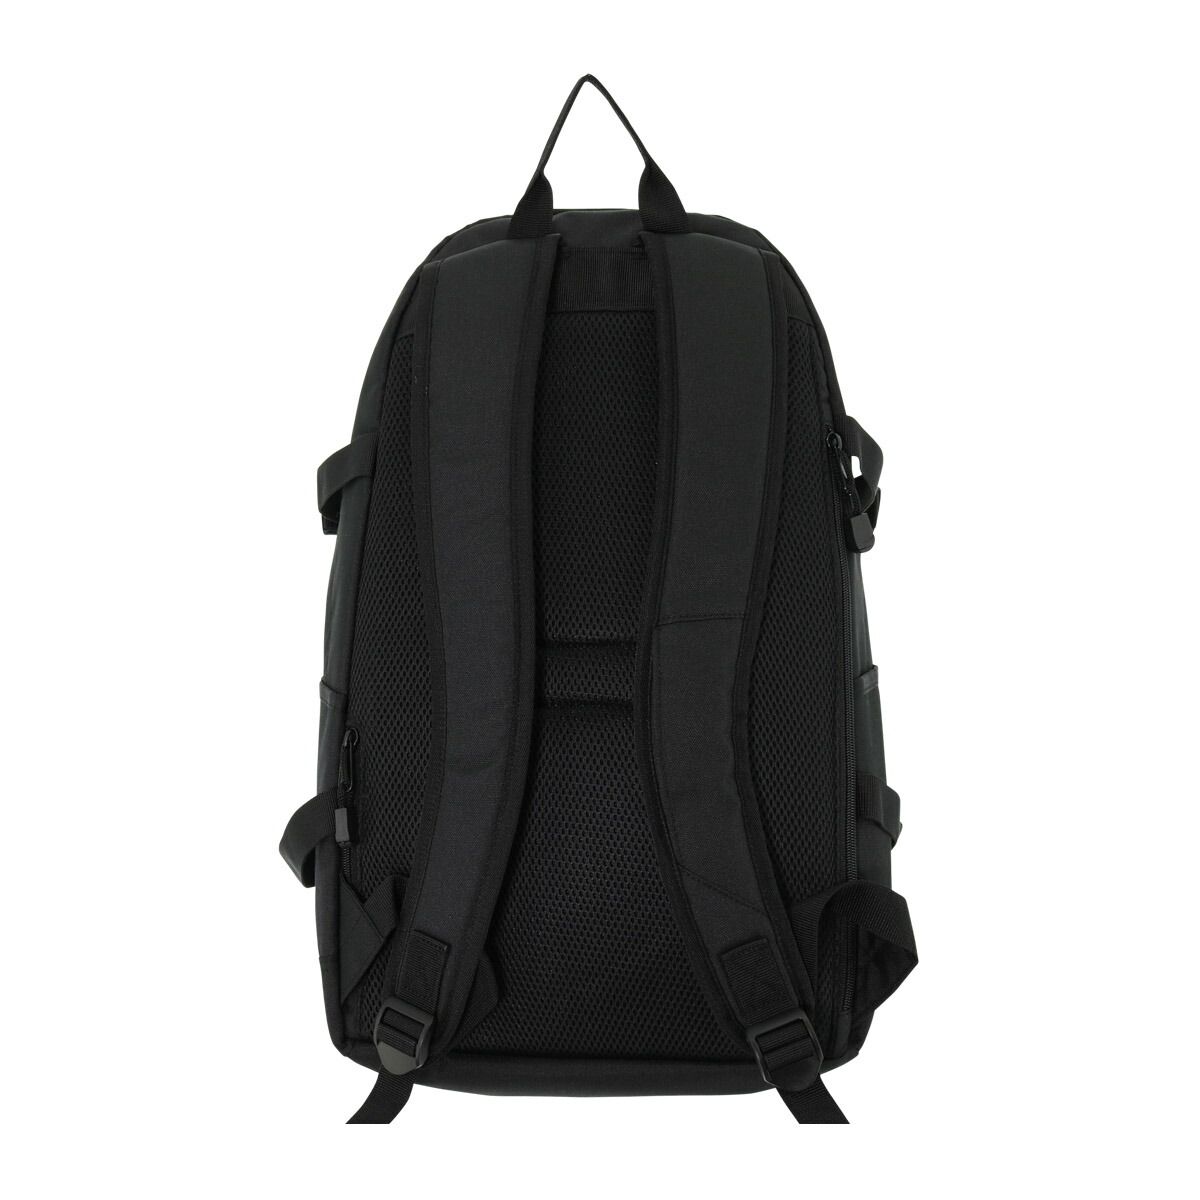  Kangol 1250 Backpack 